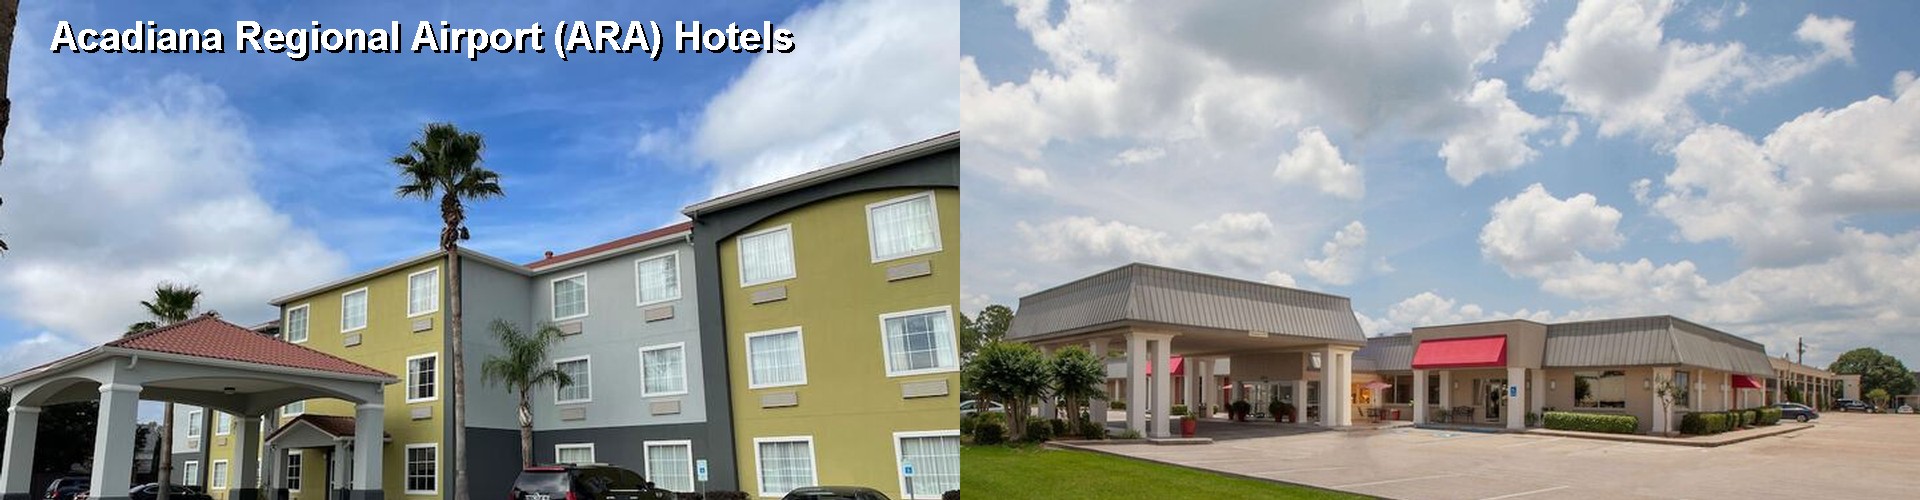 2 Best Hotels near Acadiana Regional Airport (ARA)